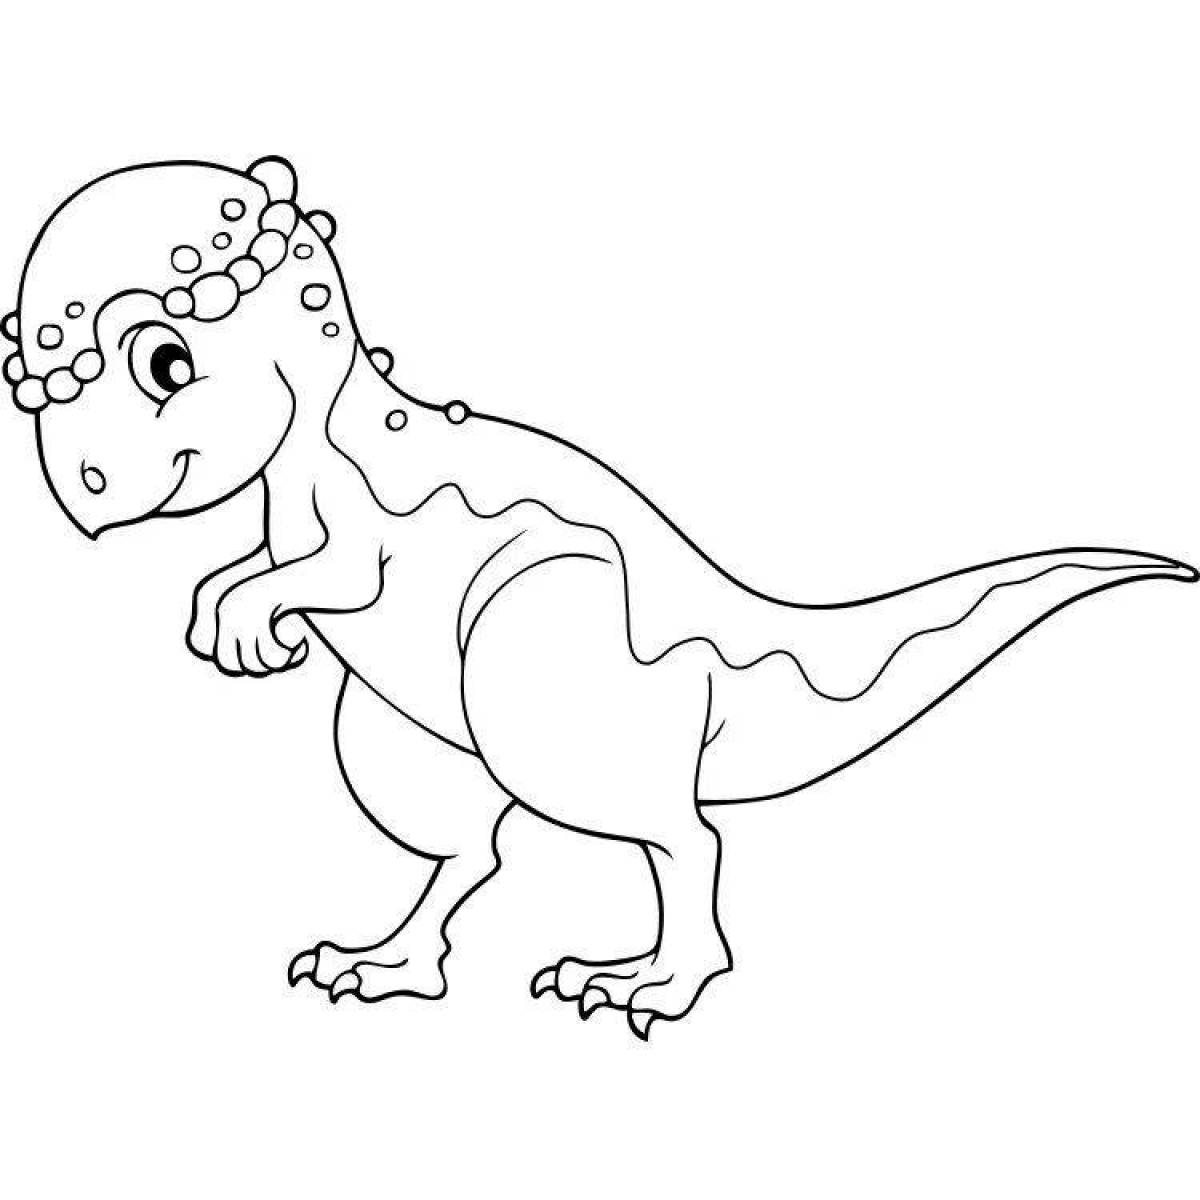 Coloring page bright pachycephalosaurus